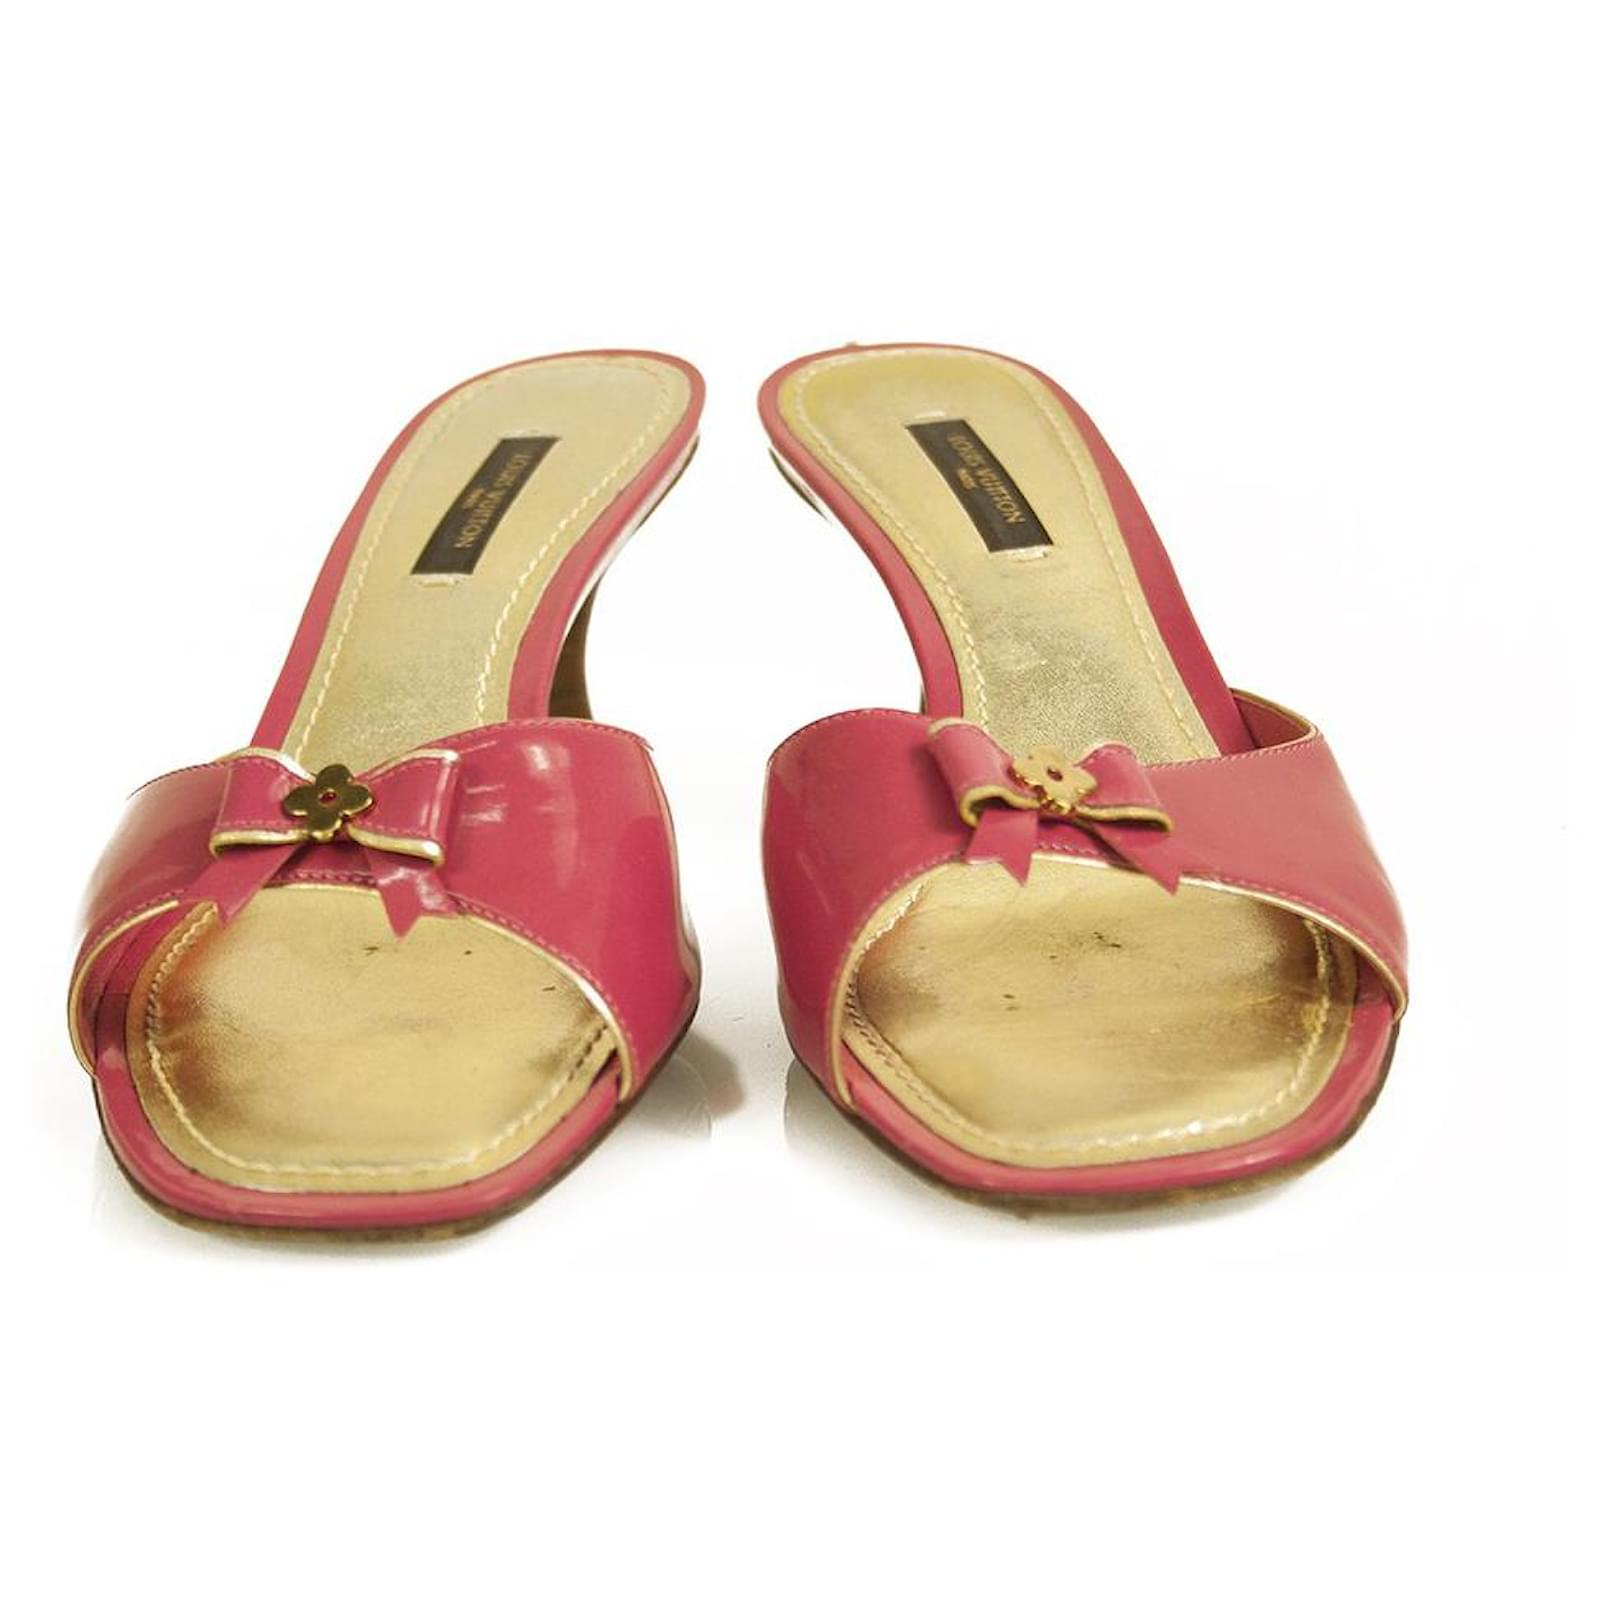 Louis Vuitton Pink Patent Leather Gold Trim Bow Mules Heels Pumps